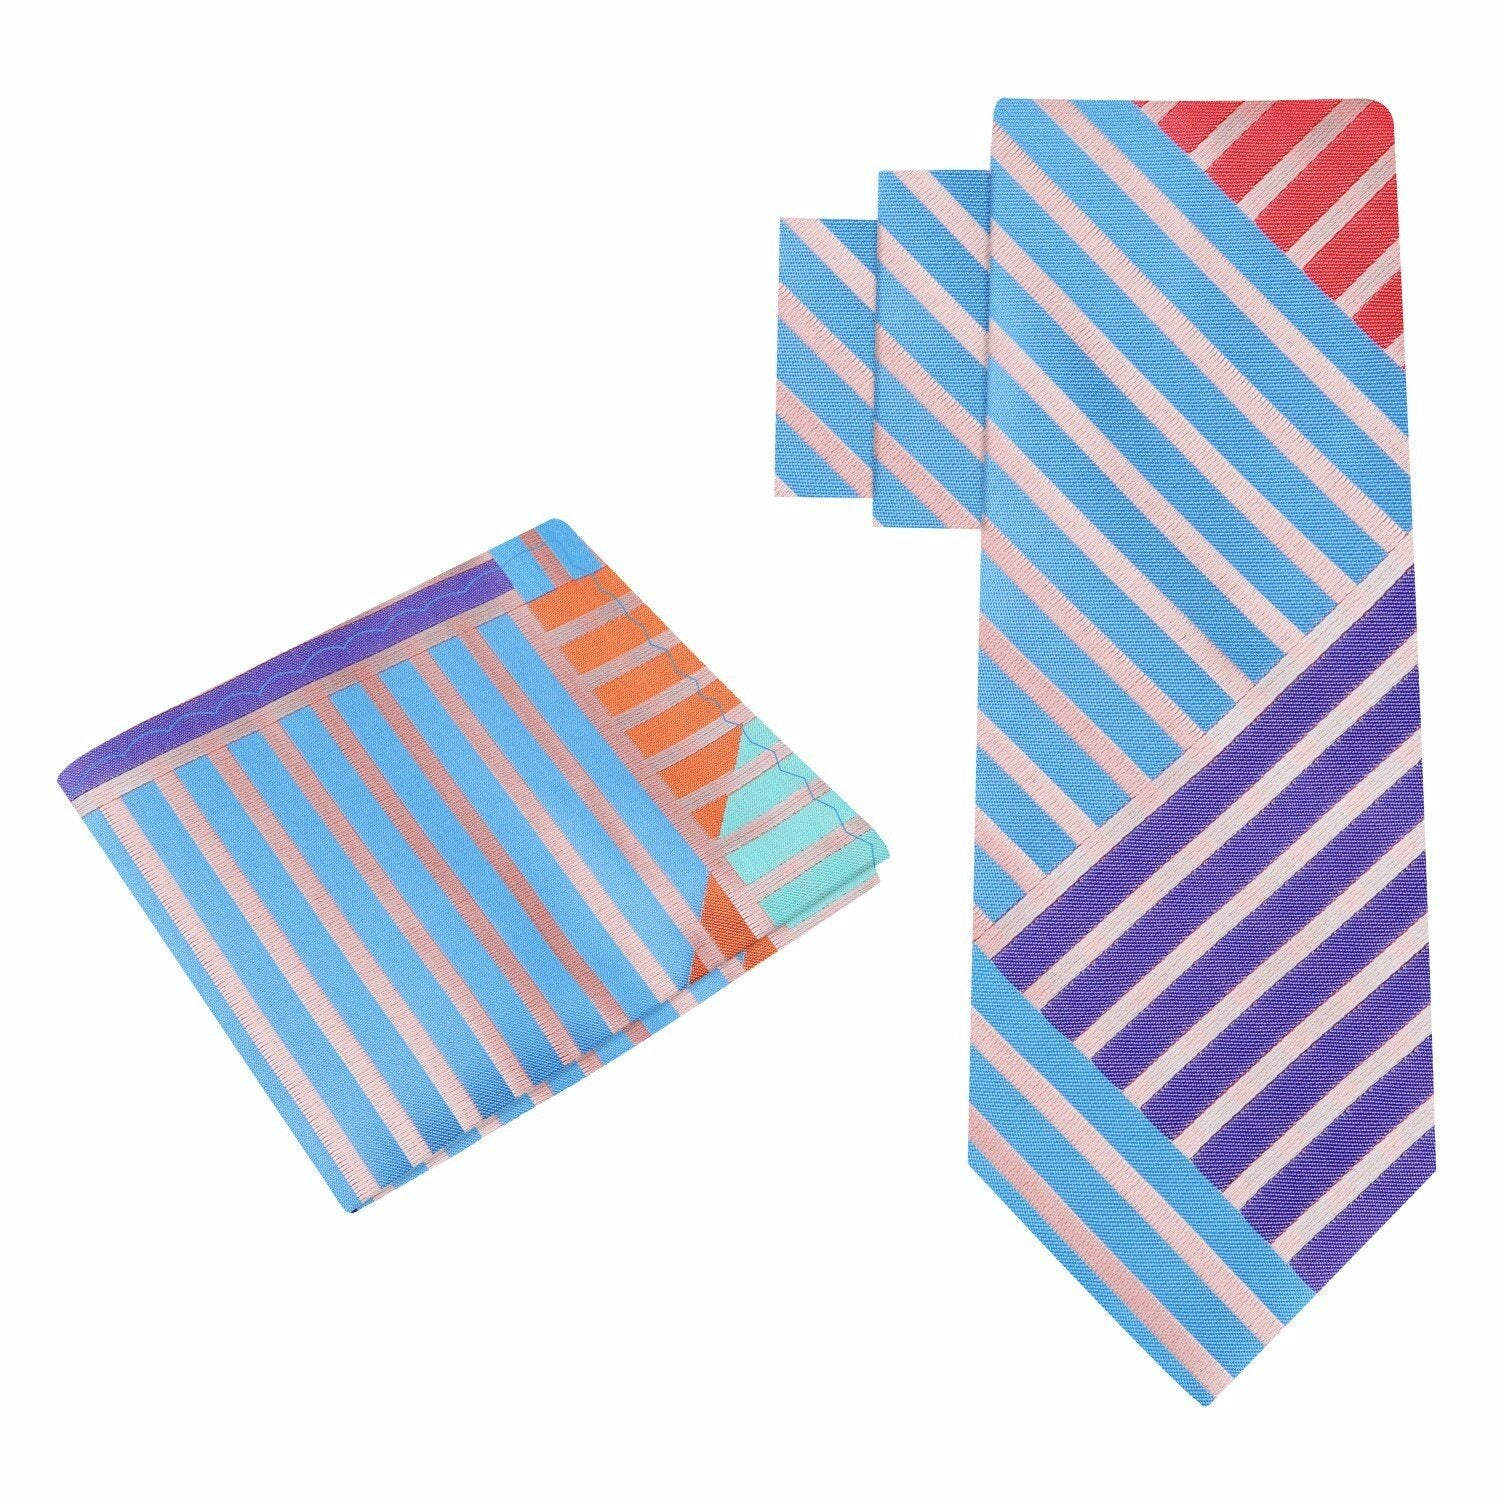 Alt View: Blue, Purple, Red, Orange Geometric Tie and Square